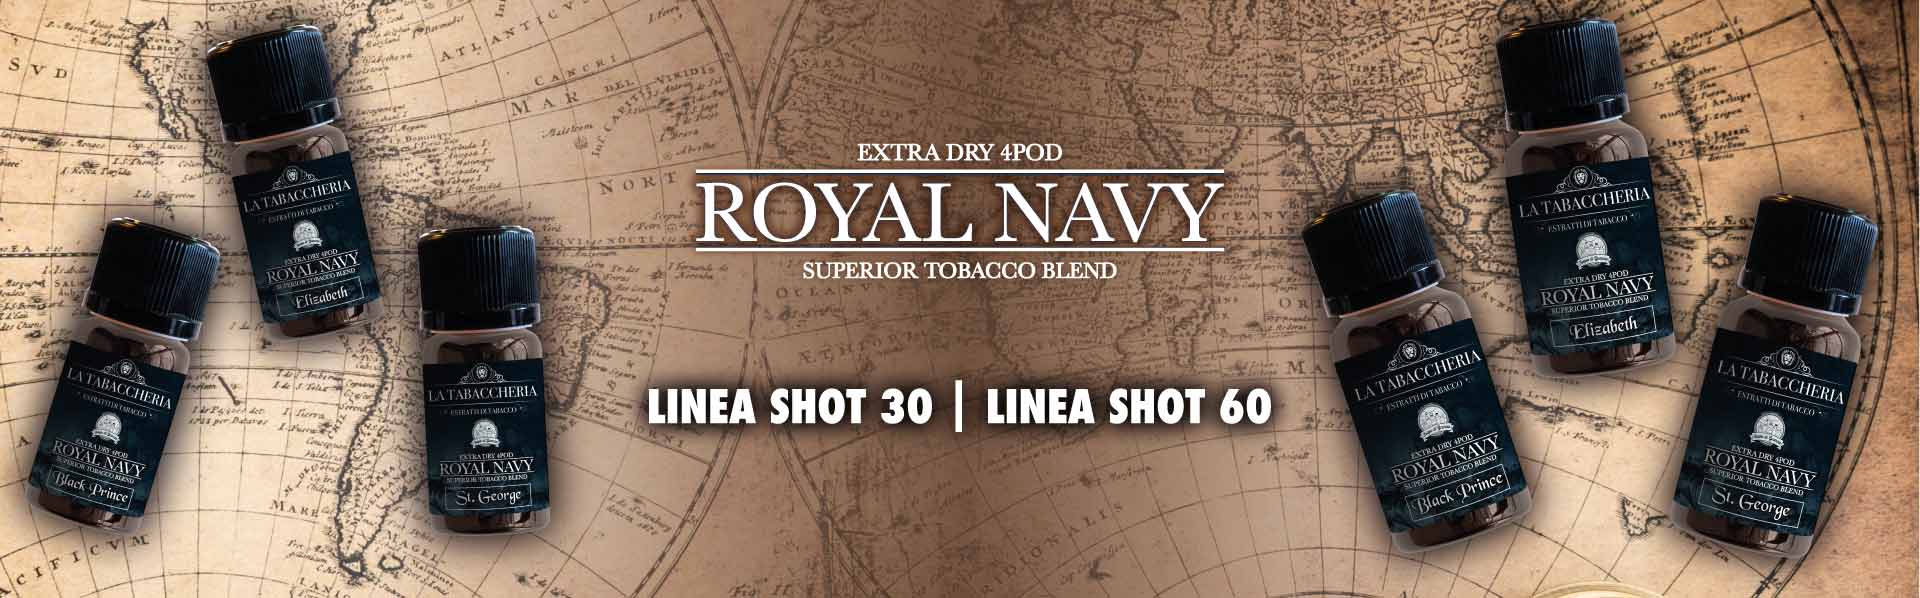 royal navy la tabaccheria